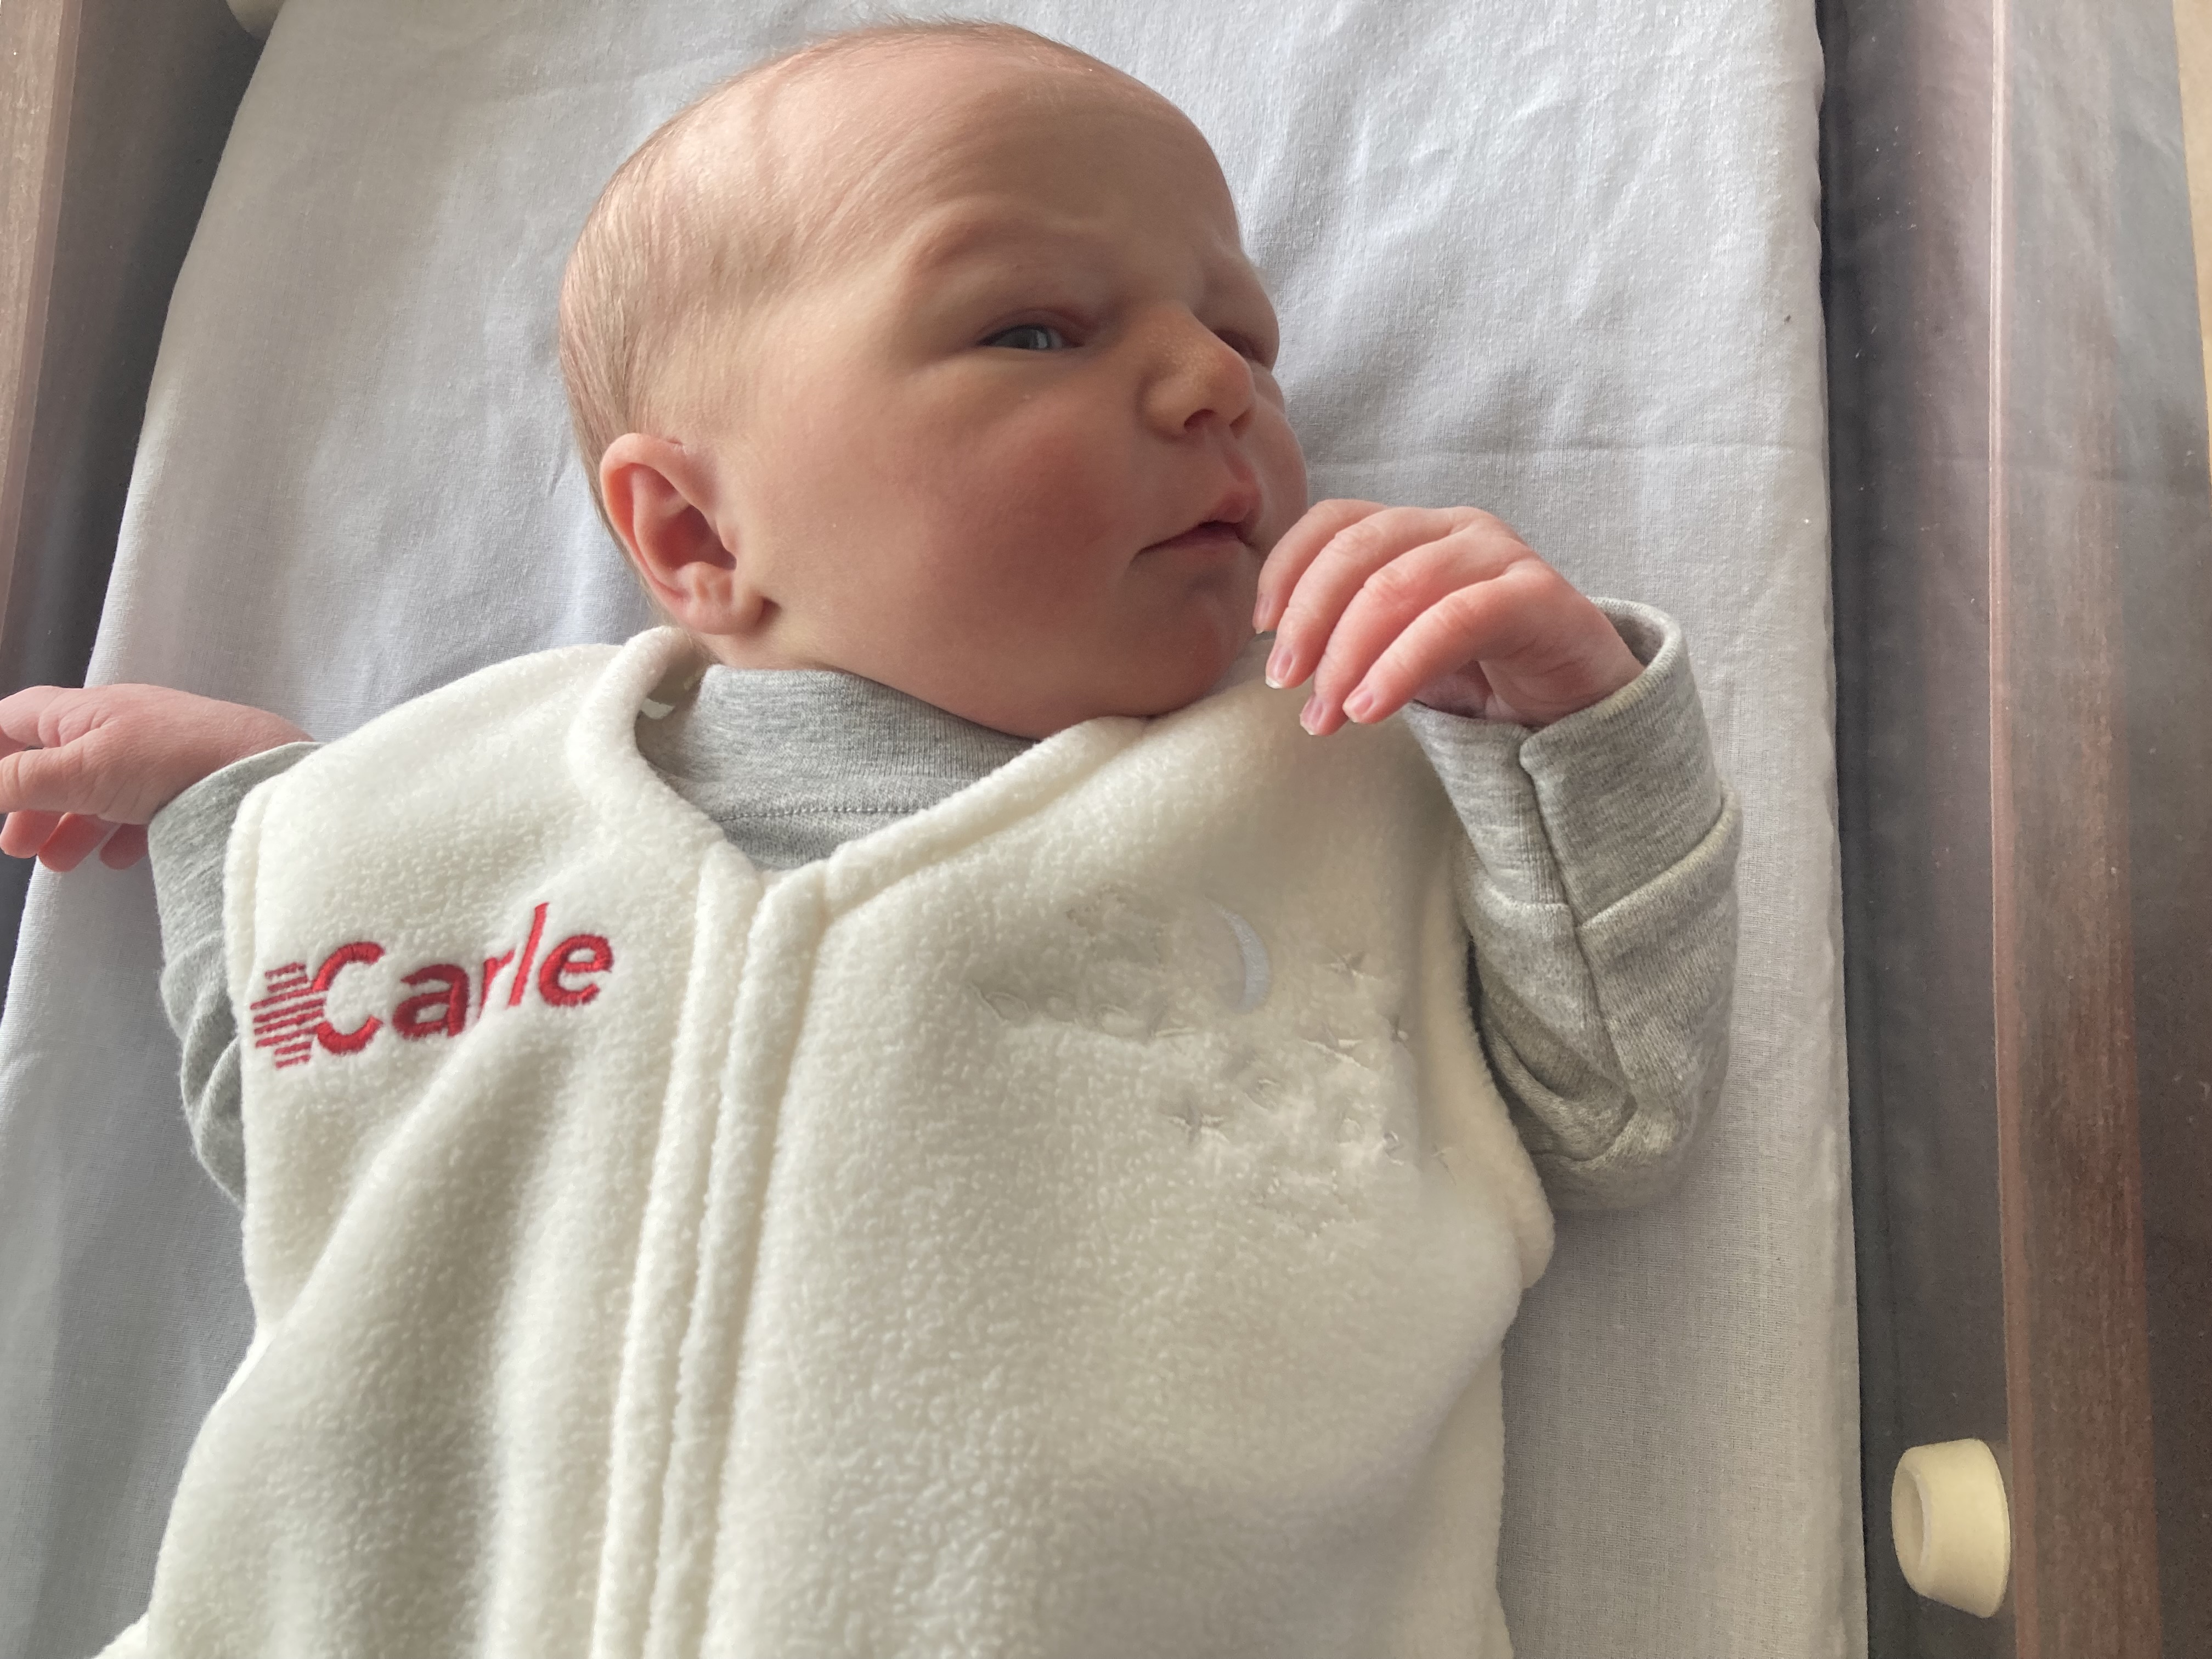 Carle’s three birthing hospitals achieve Safe Sleep Gold Level certification